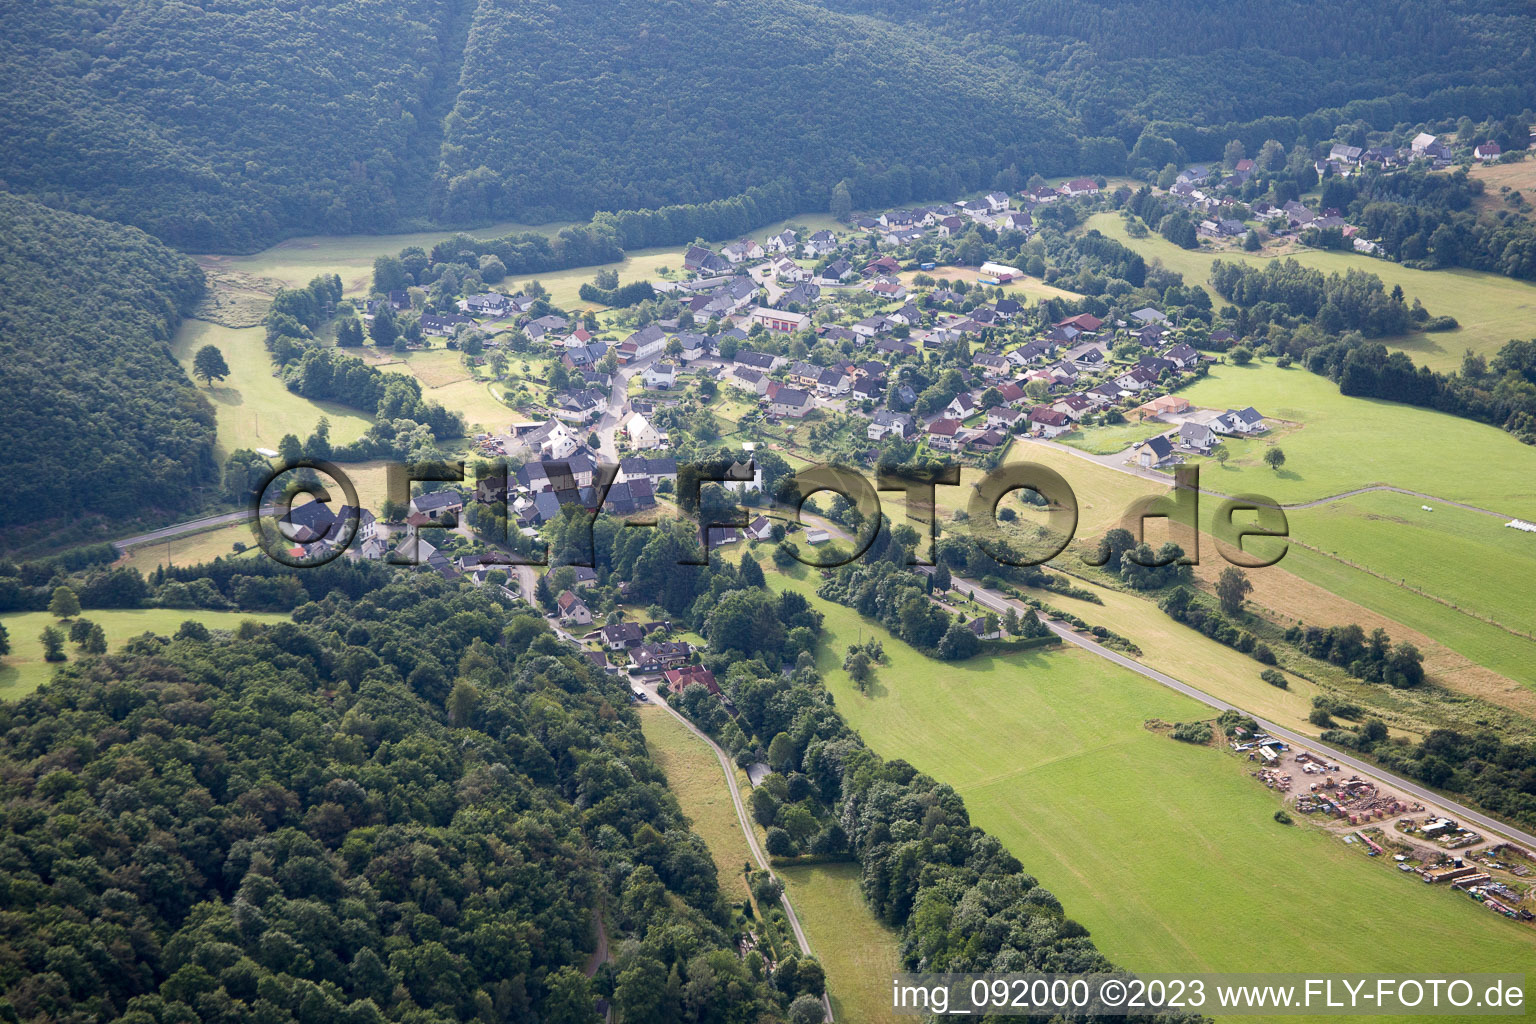 Siesbach in the state Rhineland-Palatinate, Germany